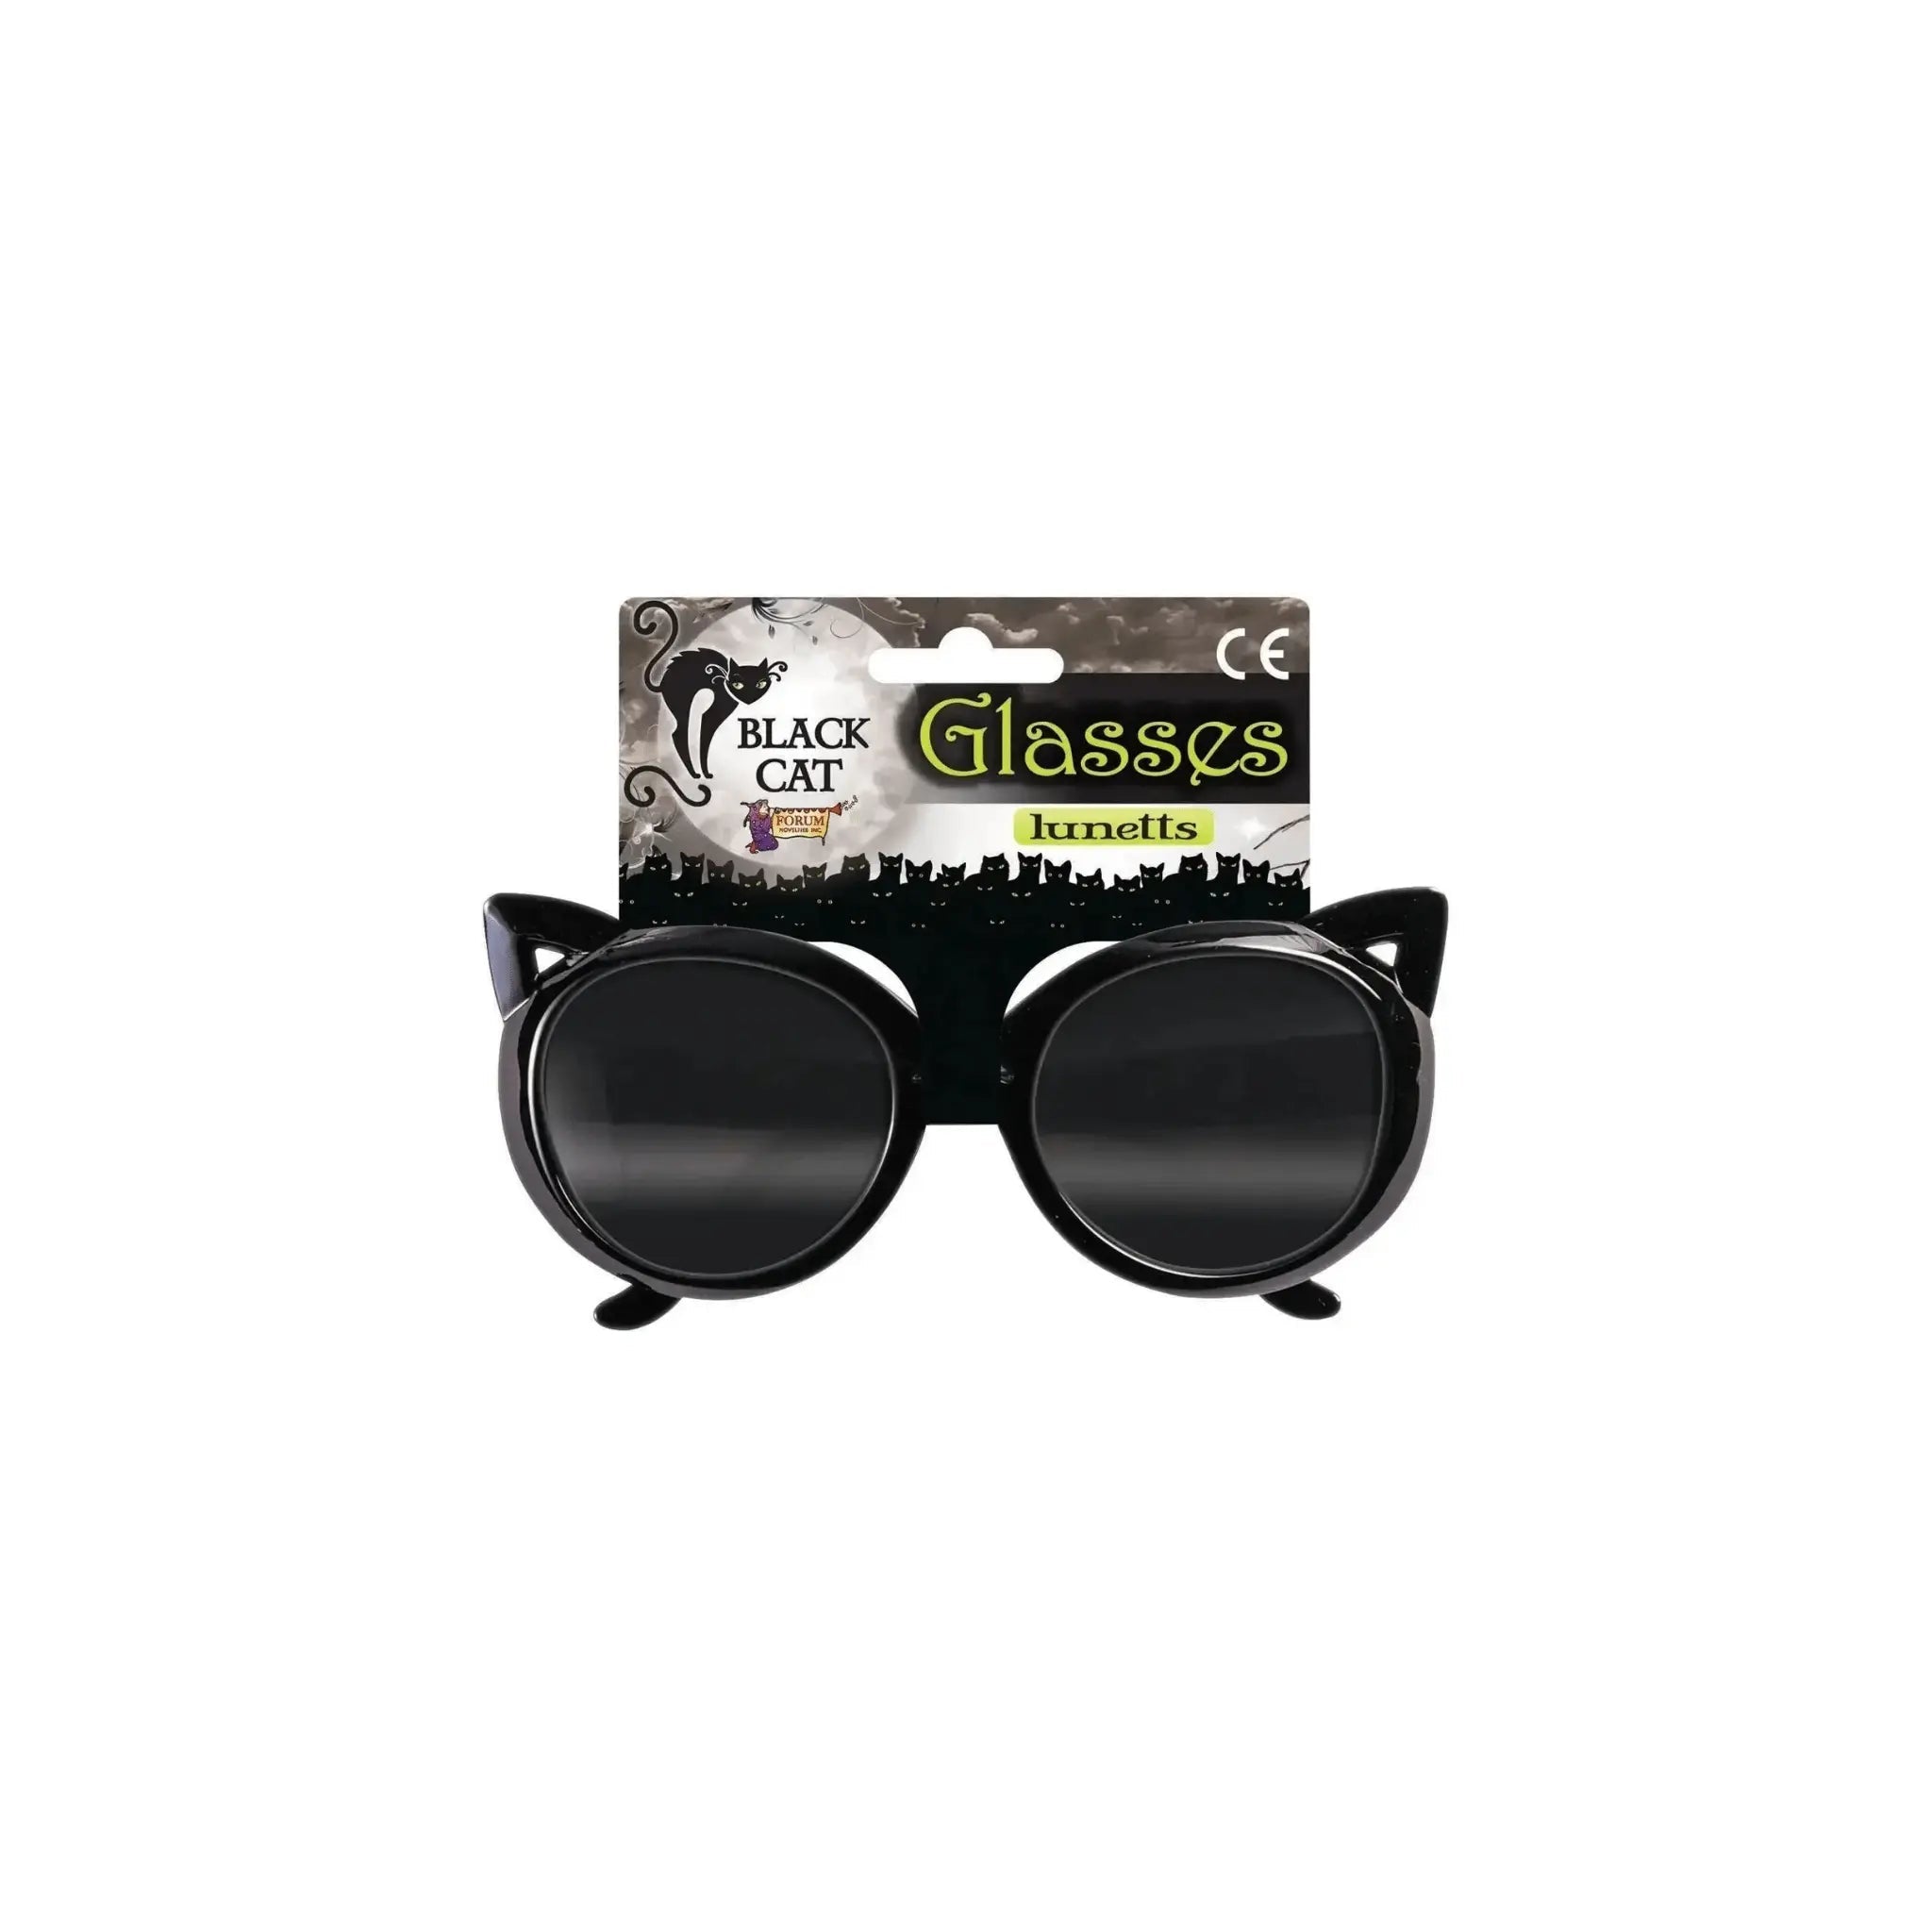 Cat Glasses - Black | The Party Hut